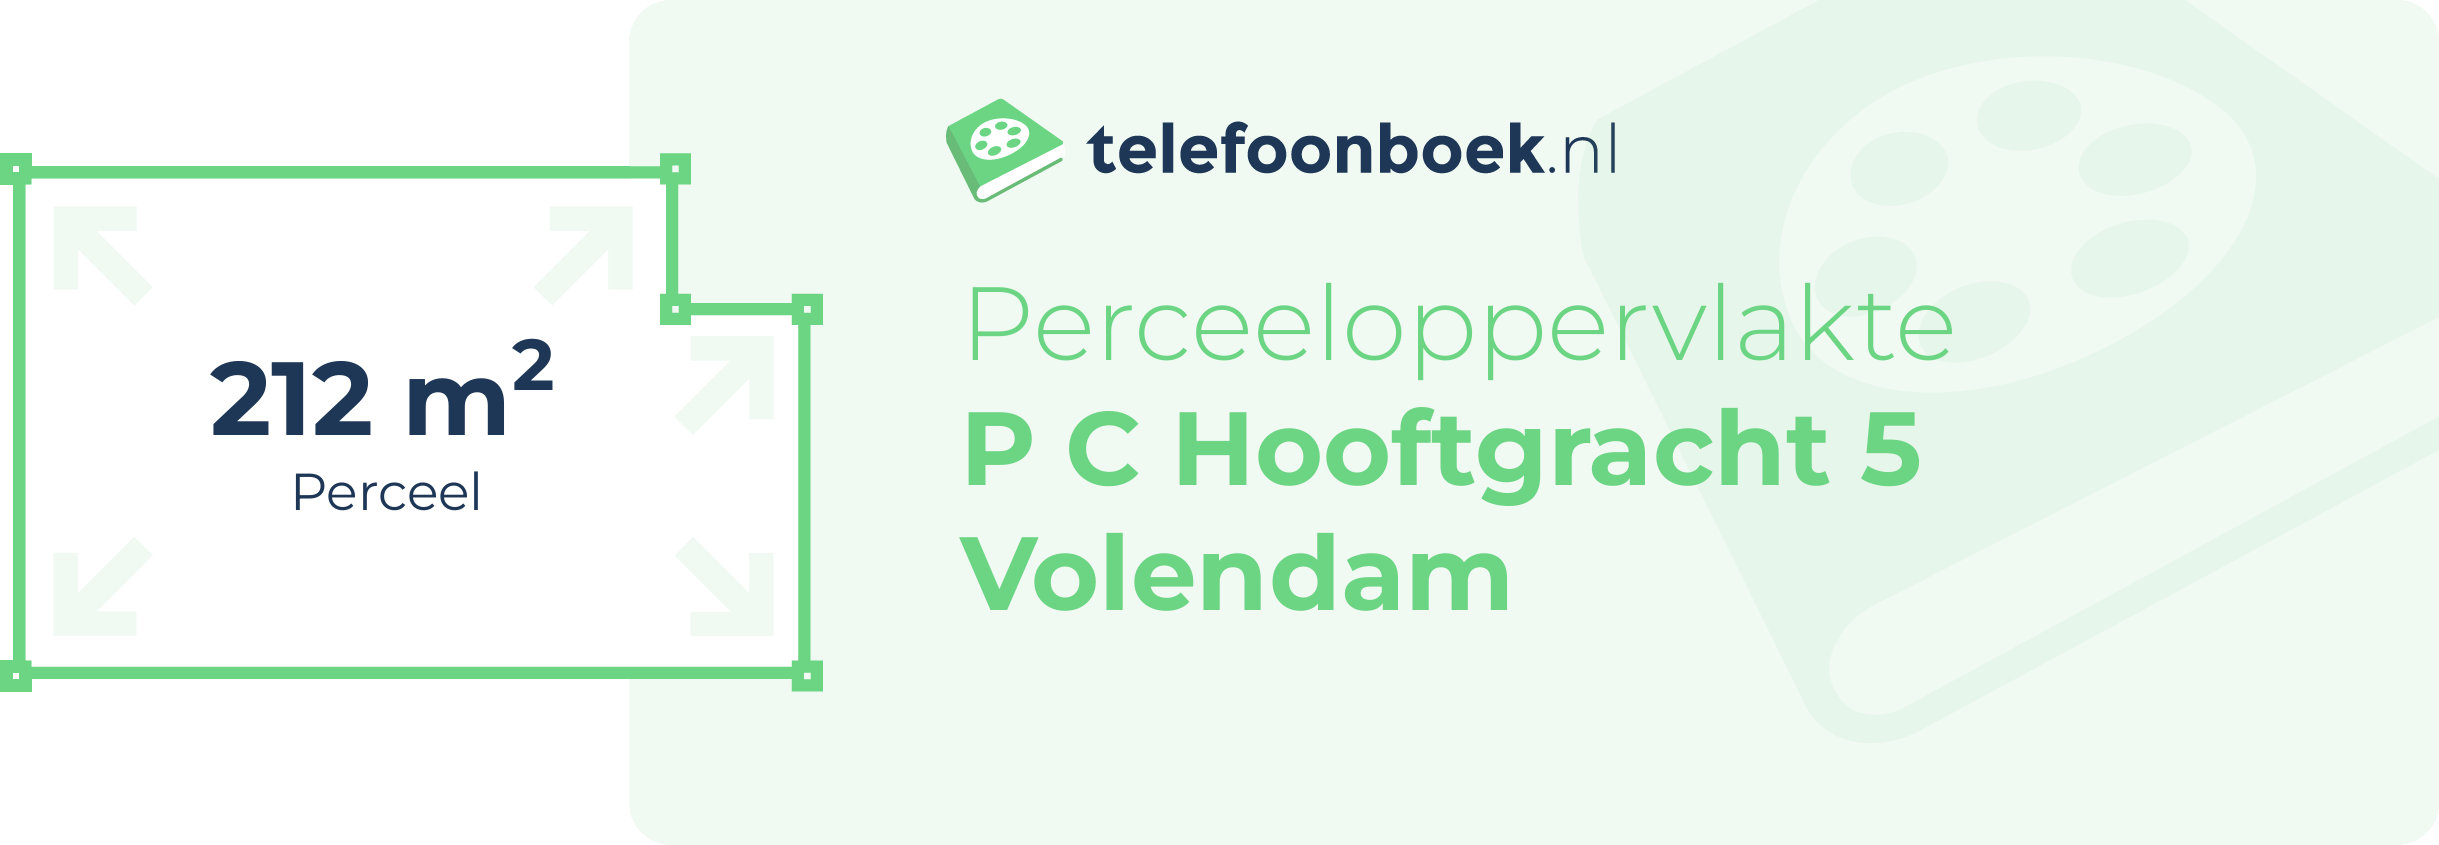 Perceeloppervlakte P C Hooftgracht 5 Volendam